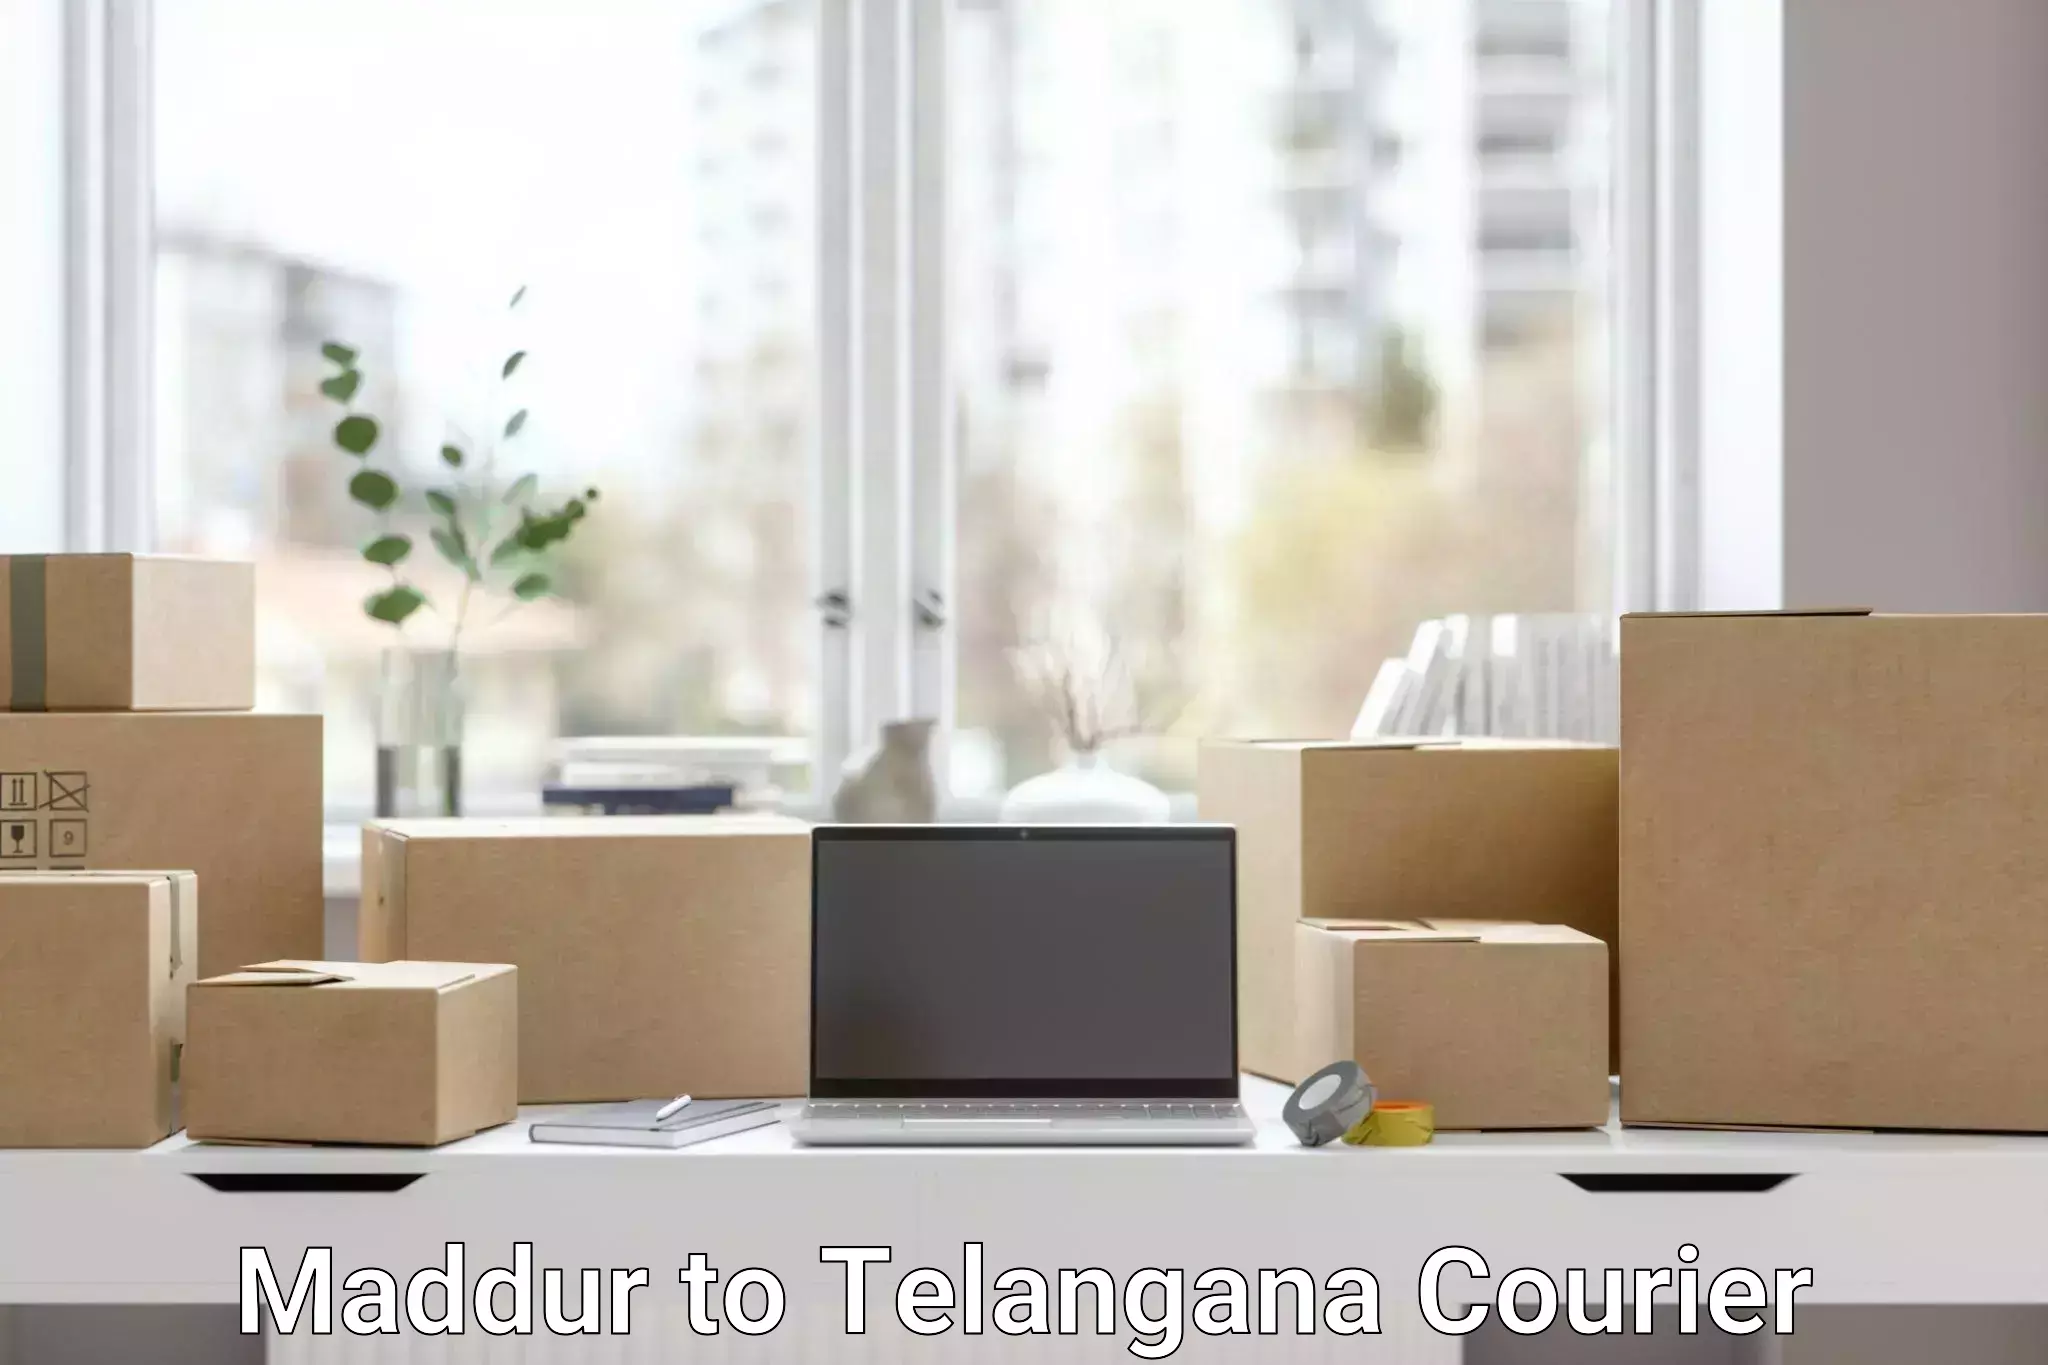 Customizable shipping options Maddur to Sangareddy